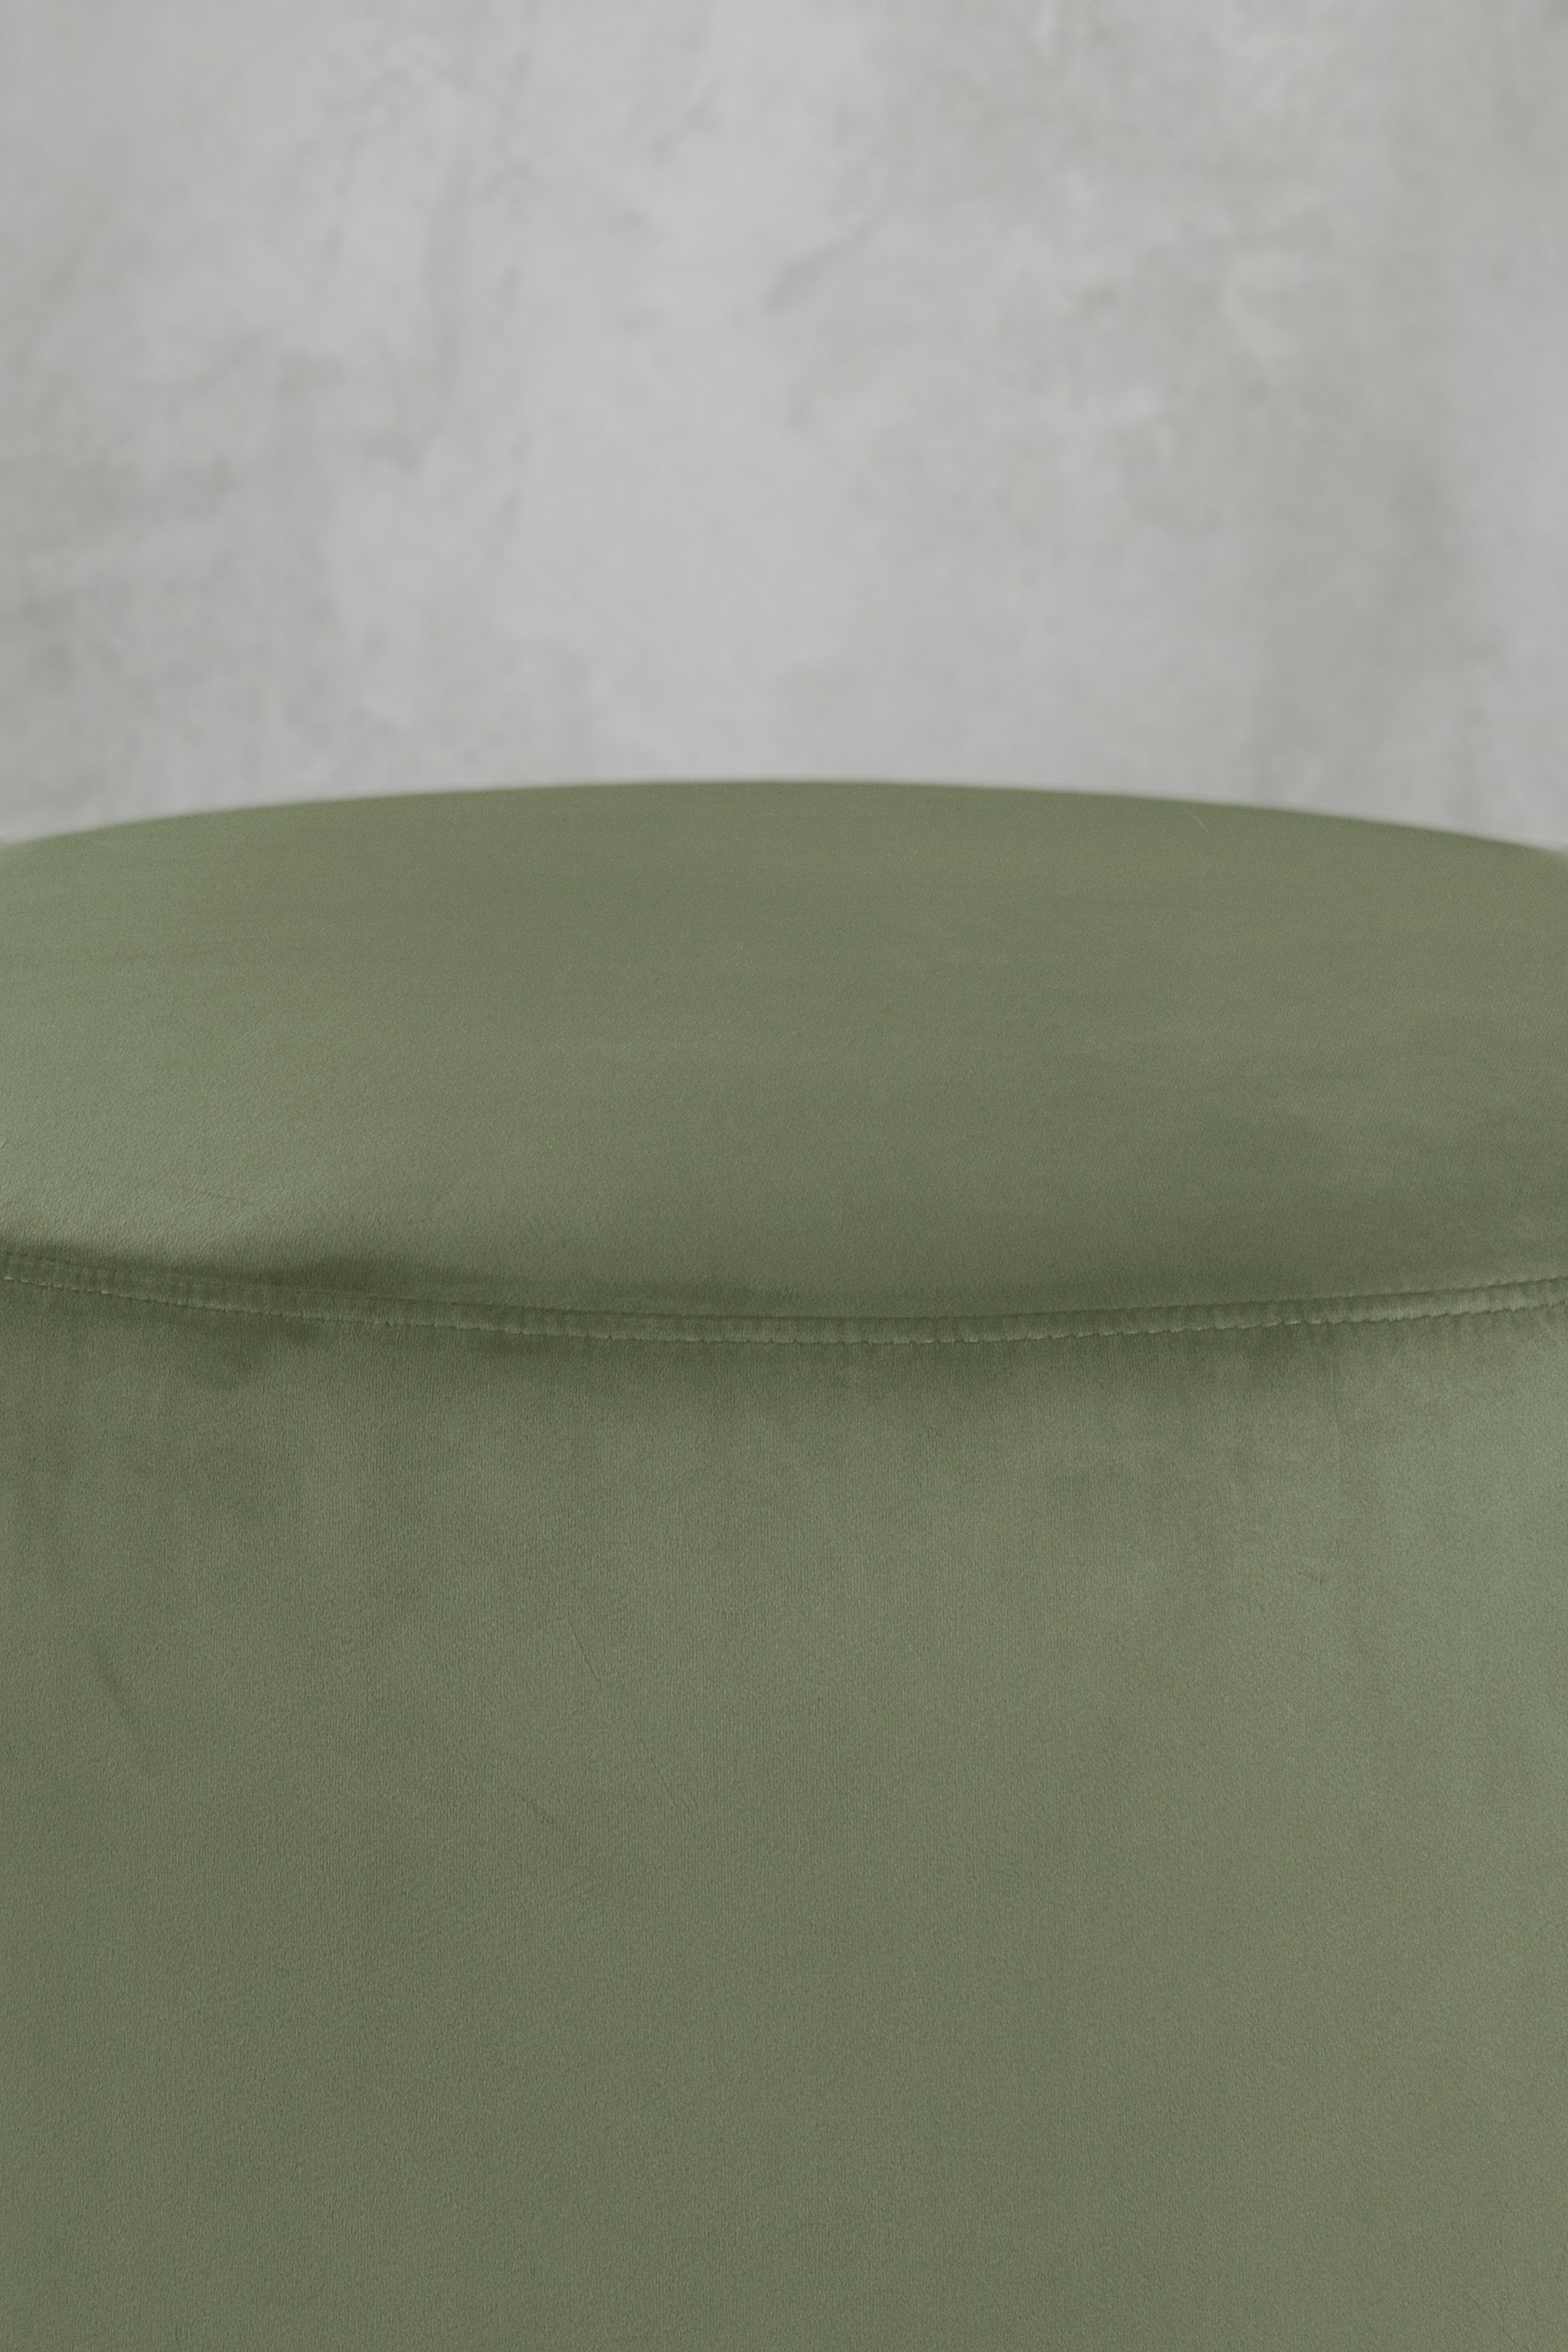 carla&marge Pouf Epomella (47x55x55 cm), Sitzhocker schmuseweichem Green Grün Seaweed Samtbezug in mit